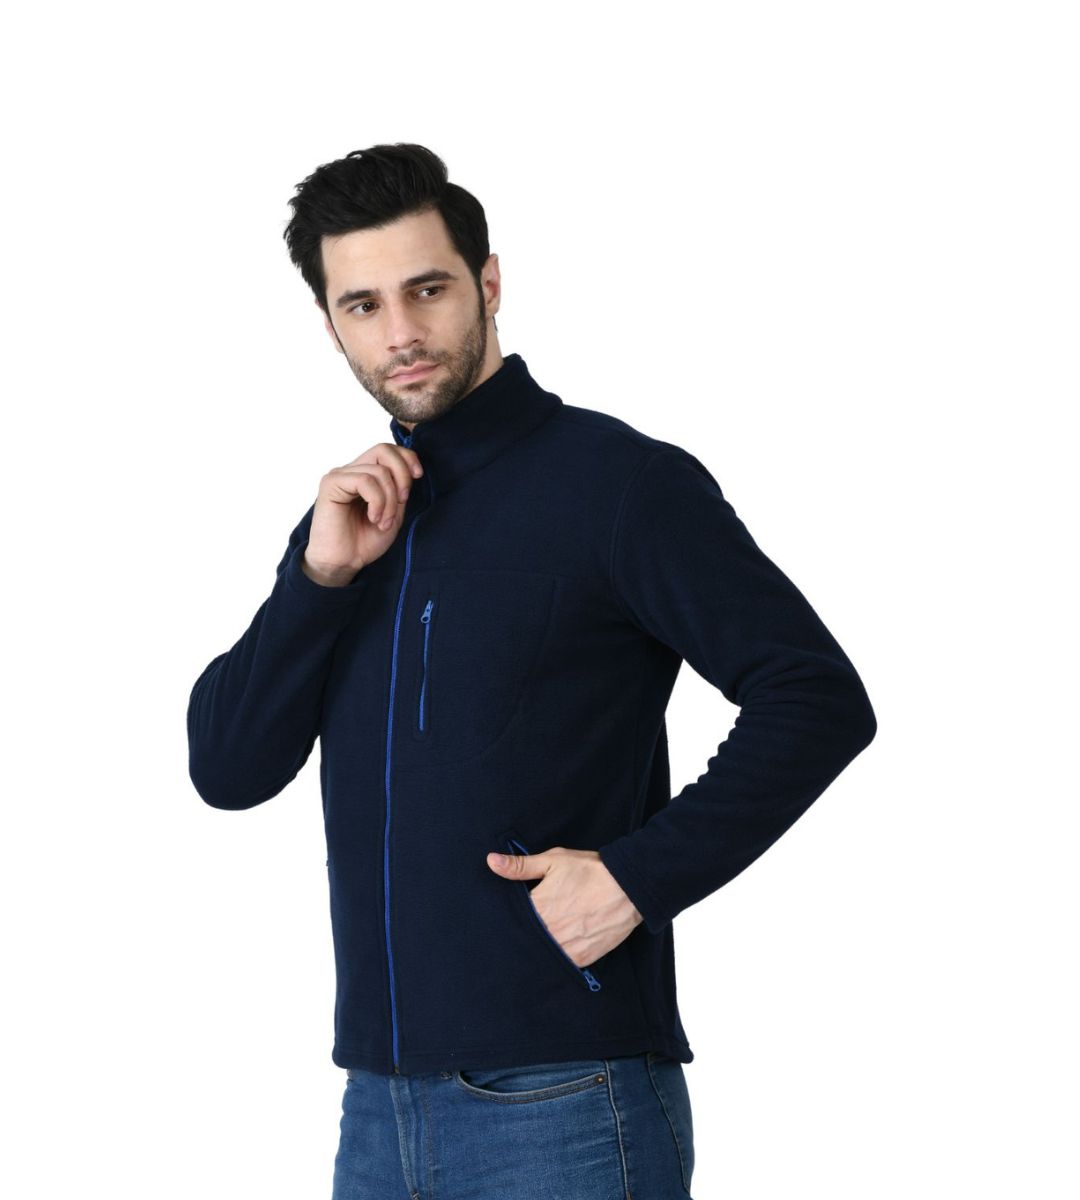 Winter Leather Jackets for Men: 8 Best Winter Leather Jackets for Men to  Spice up your Wardrobe - The Economic Times